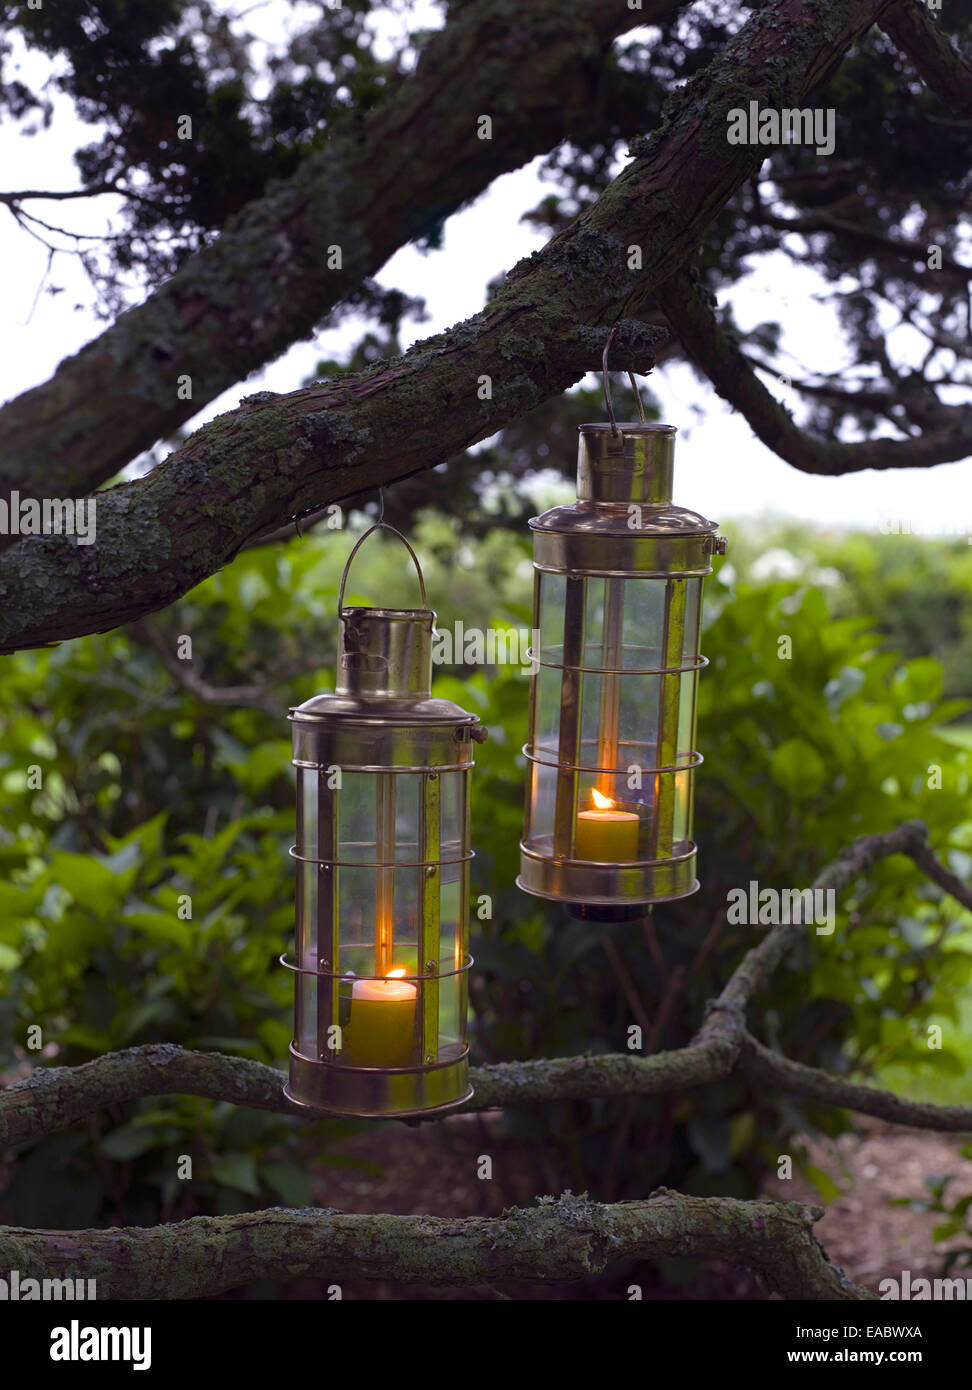 Candele in lanterne appese da albero al tramonto Foto stock - Alamy